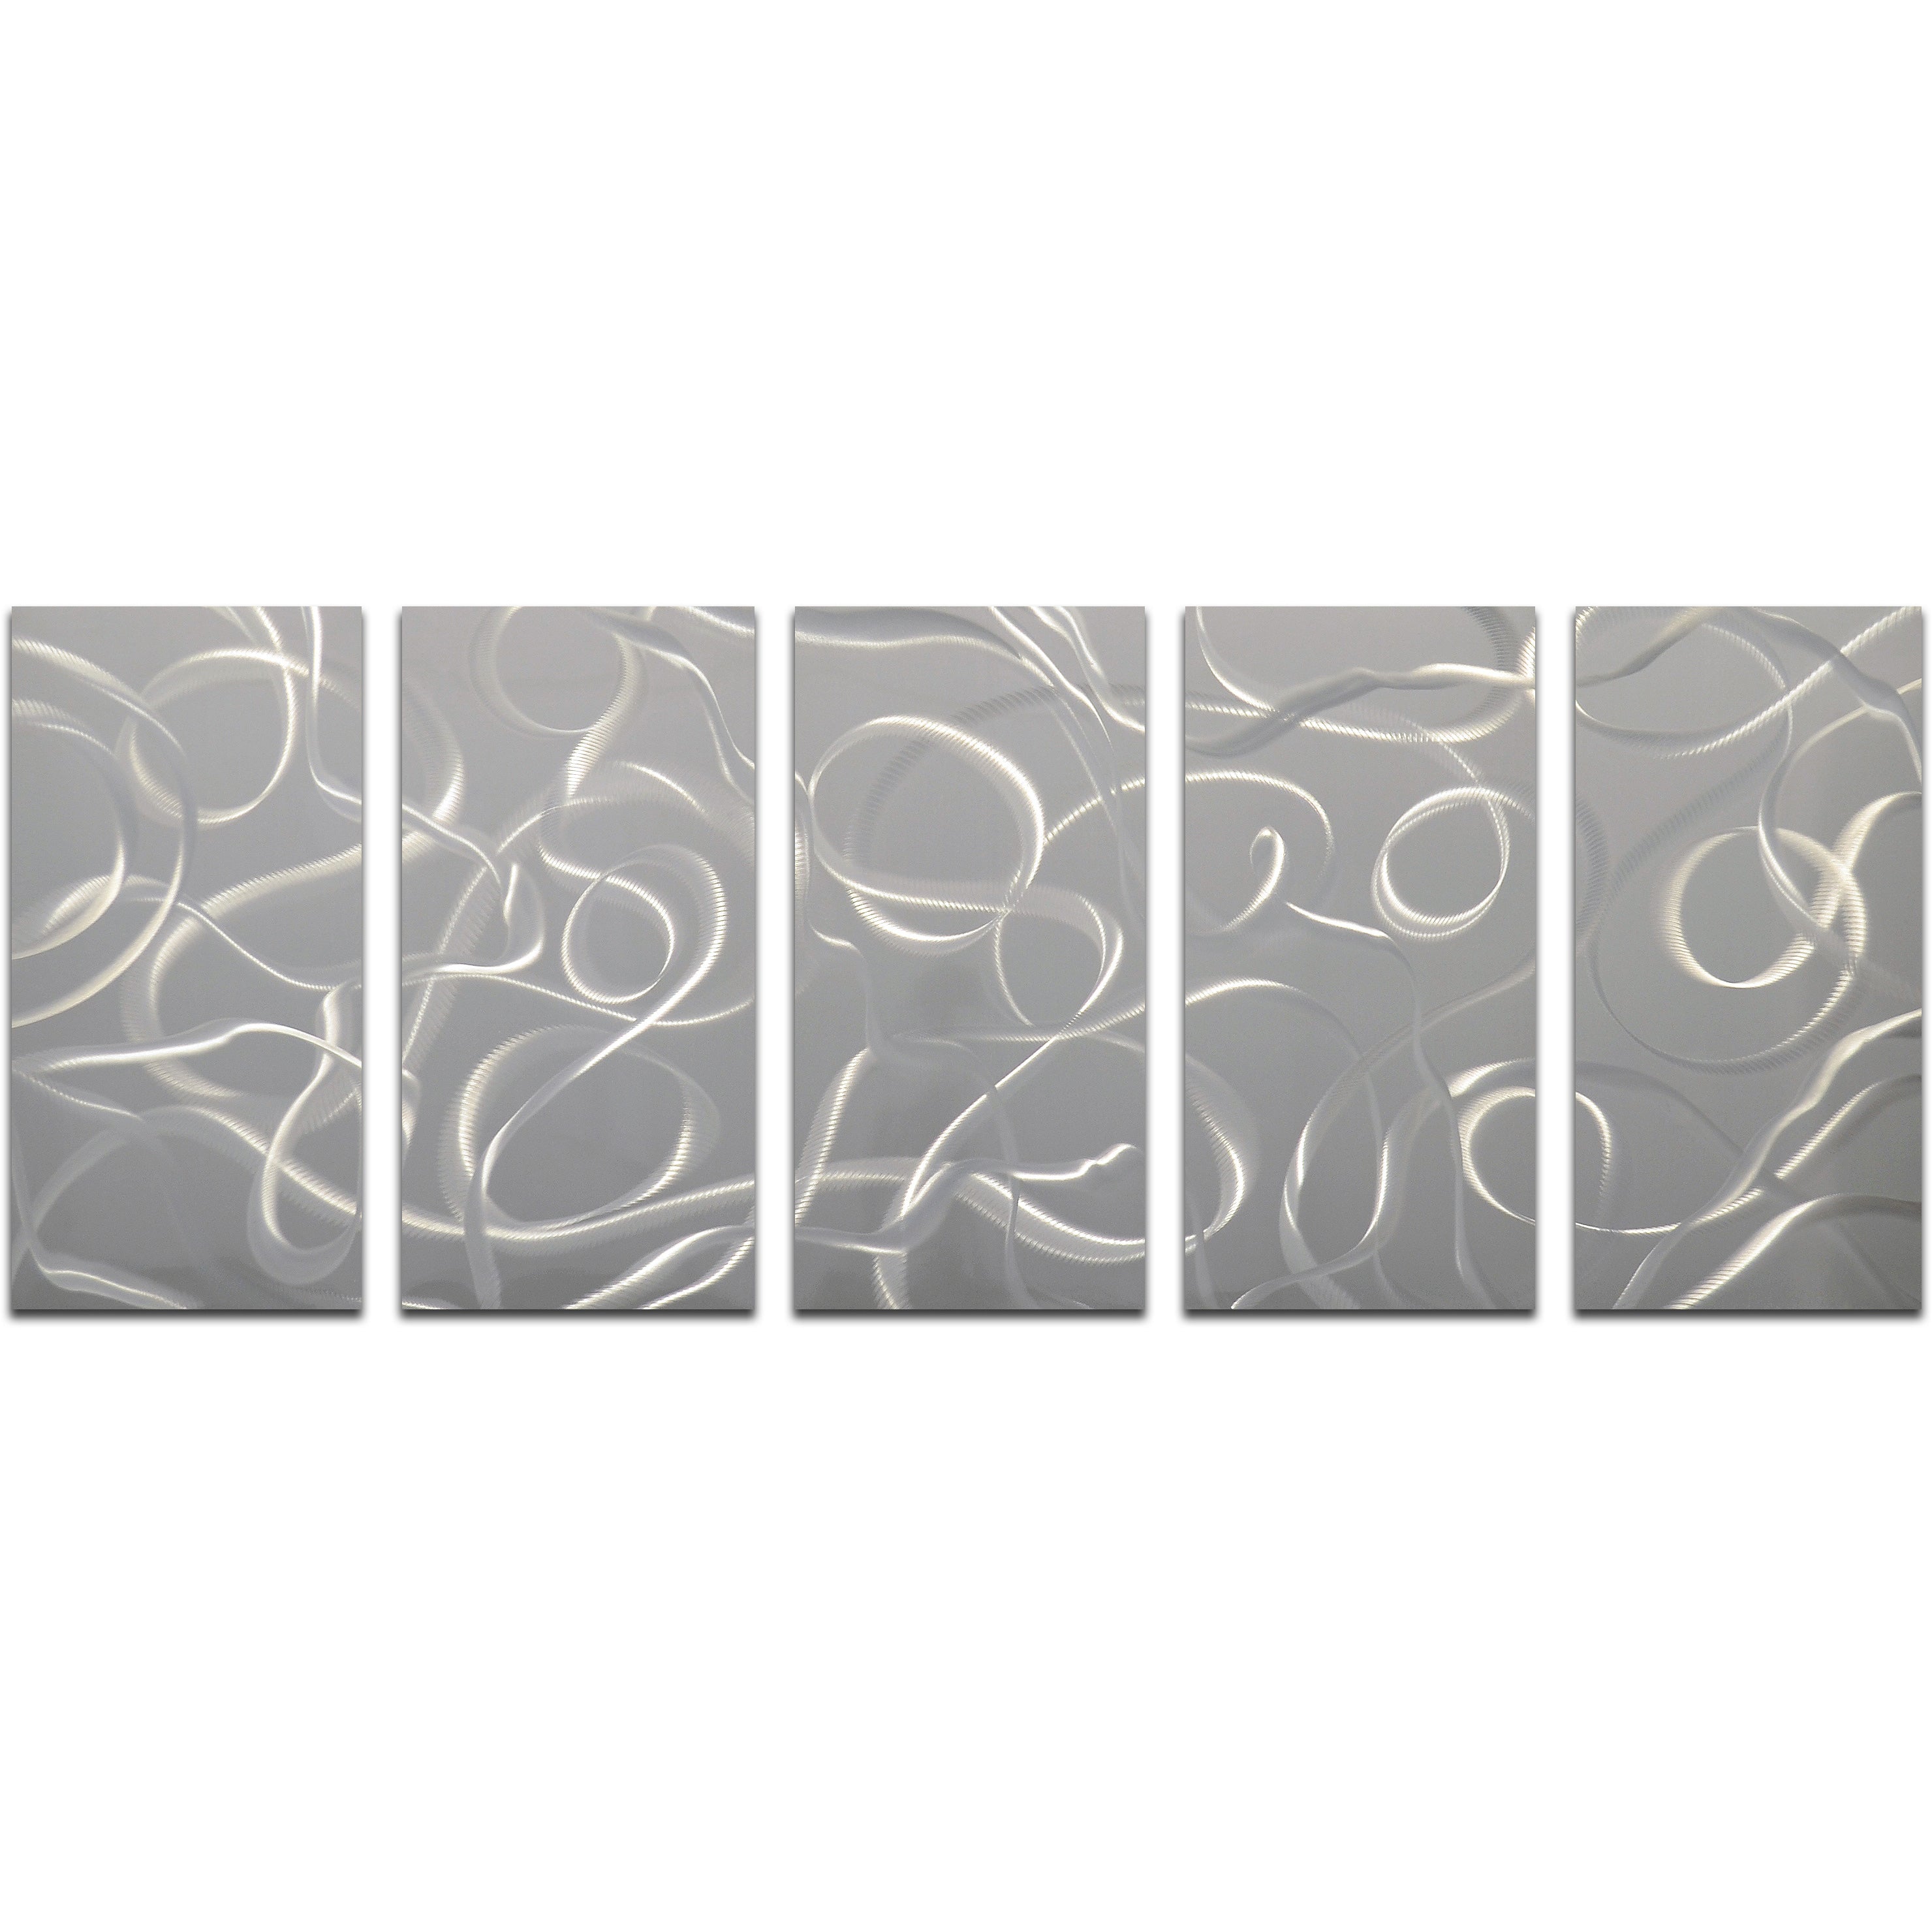 A cacophony of twirls 5 Piece Handmade Metal Wall Art